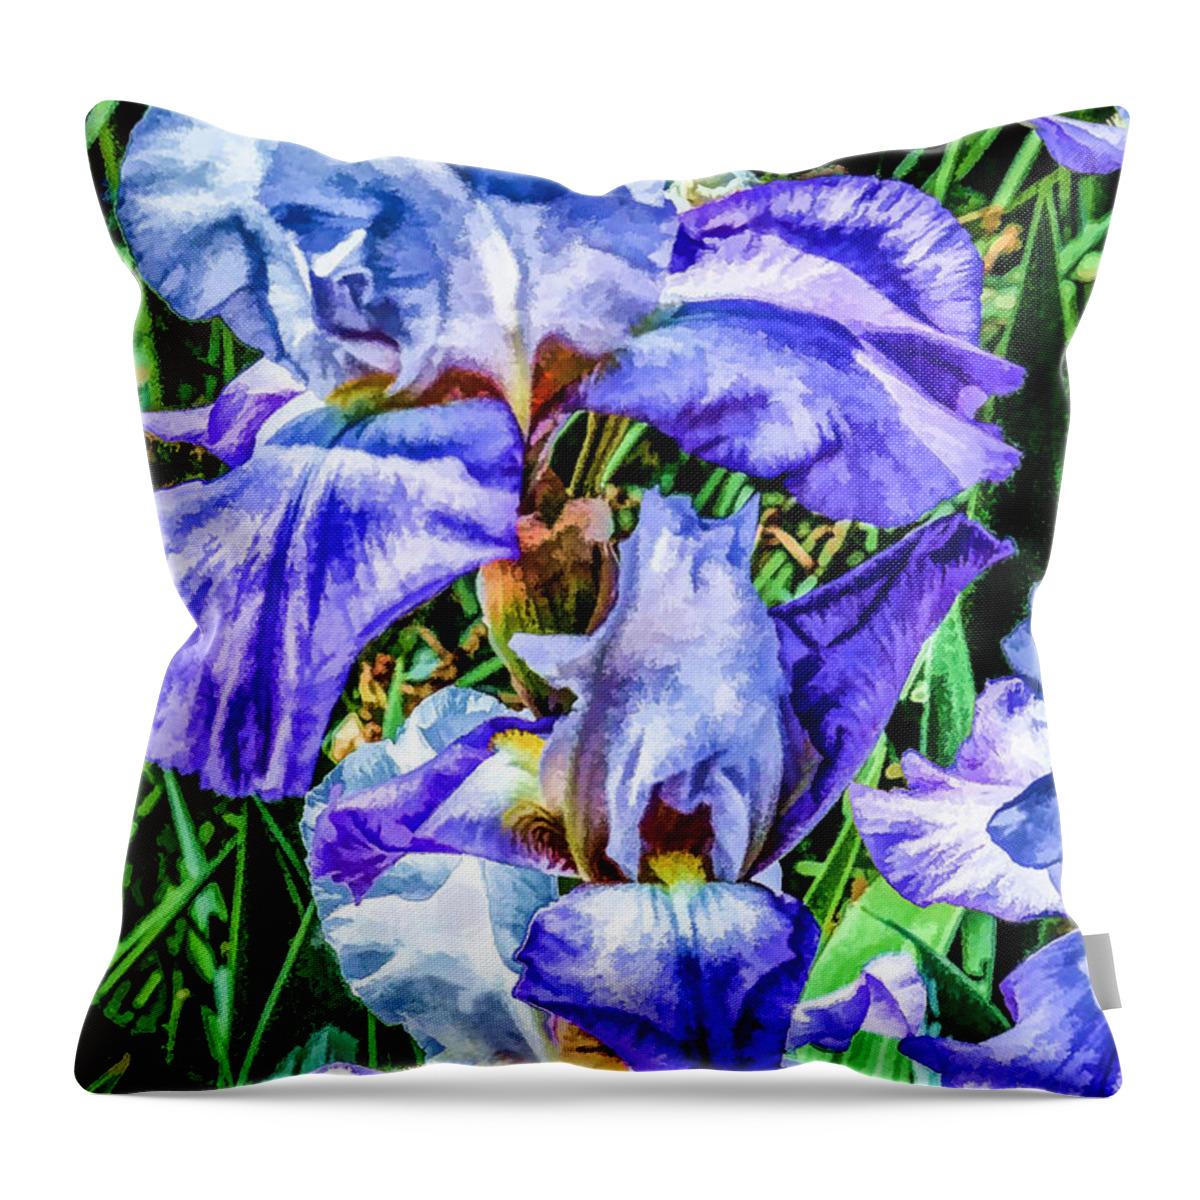 Iris Throw Pillow featuring the digital art Painted Iris by Georgianne Giese